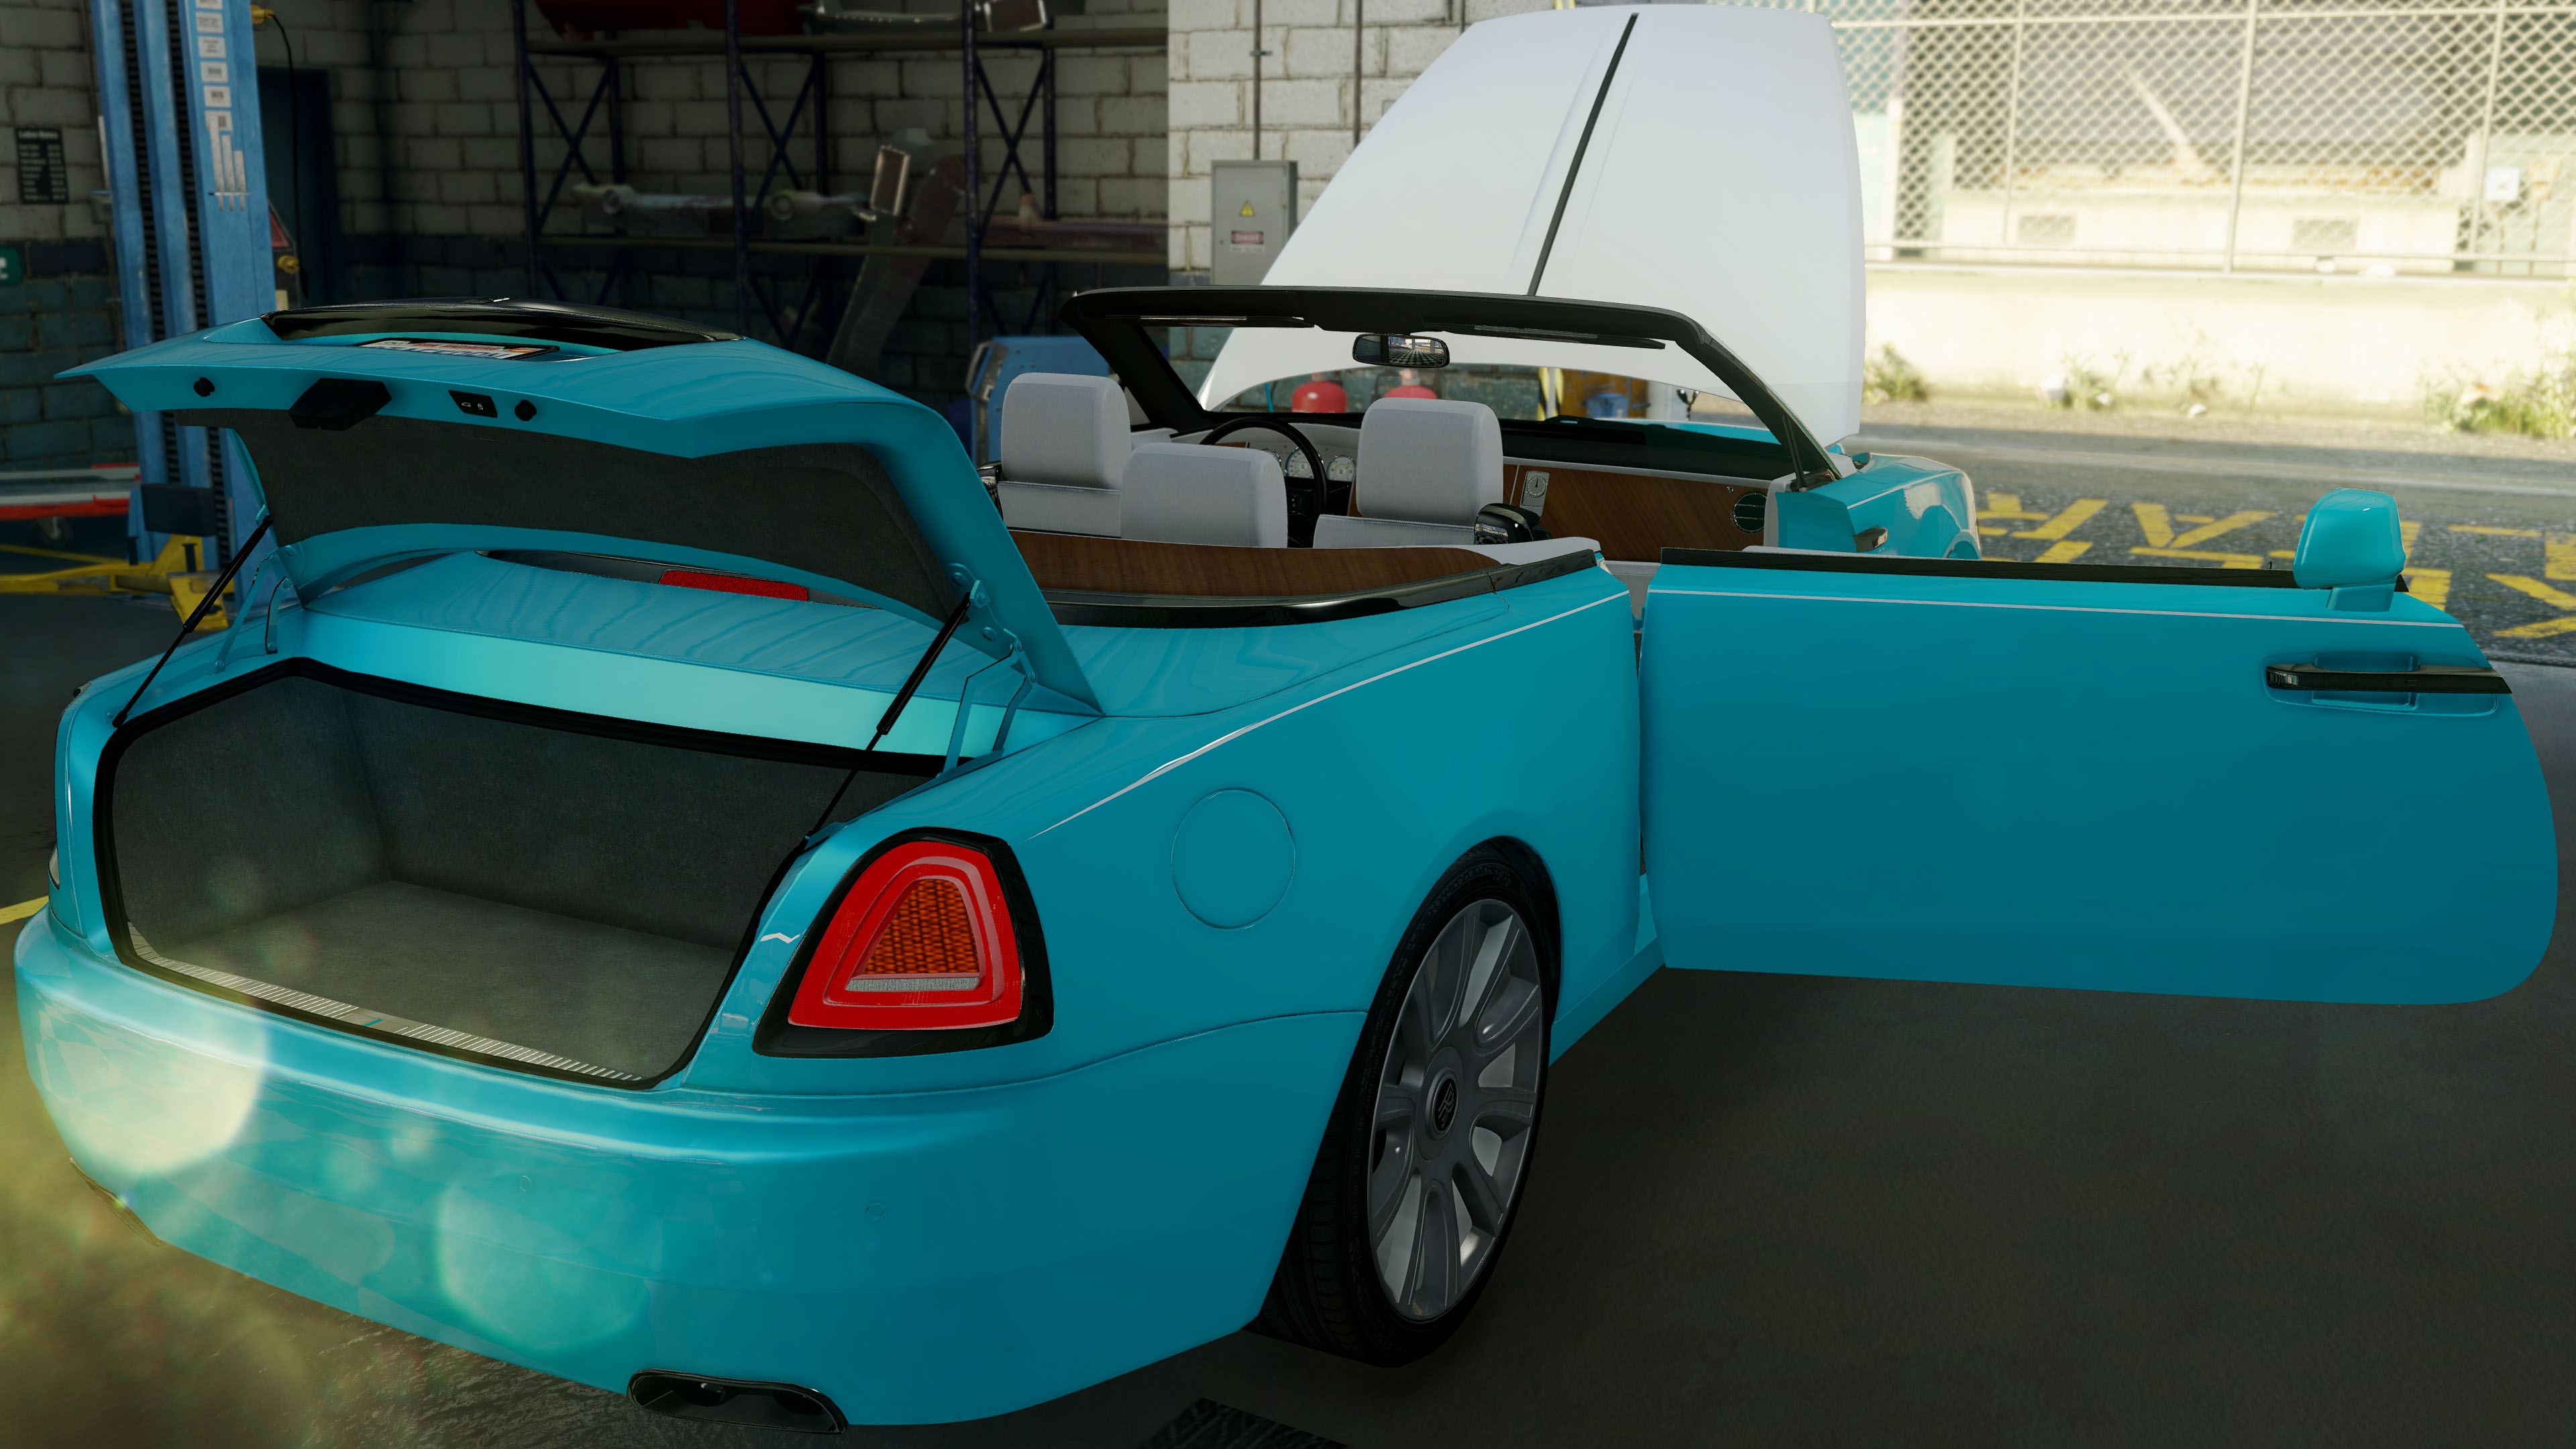 GTA 5  Past DLC Vehicle Customization  Enus Windsor Drop RollsRoyce Dawn   YouTube